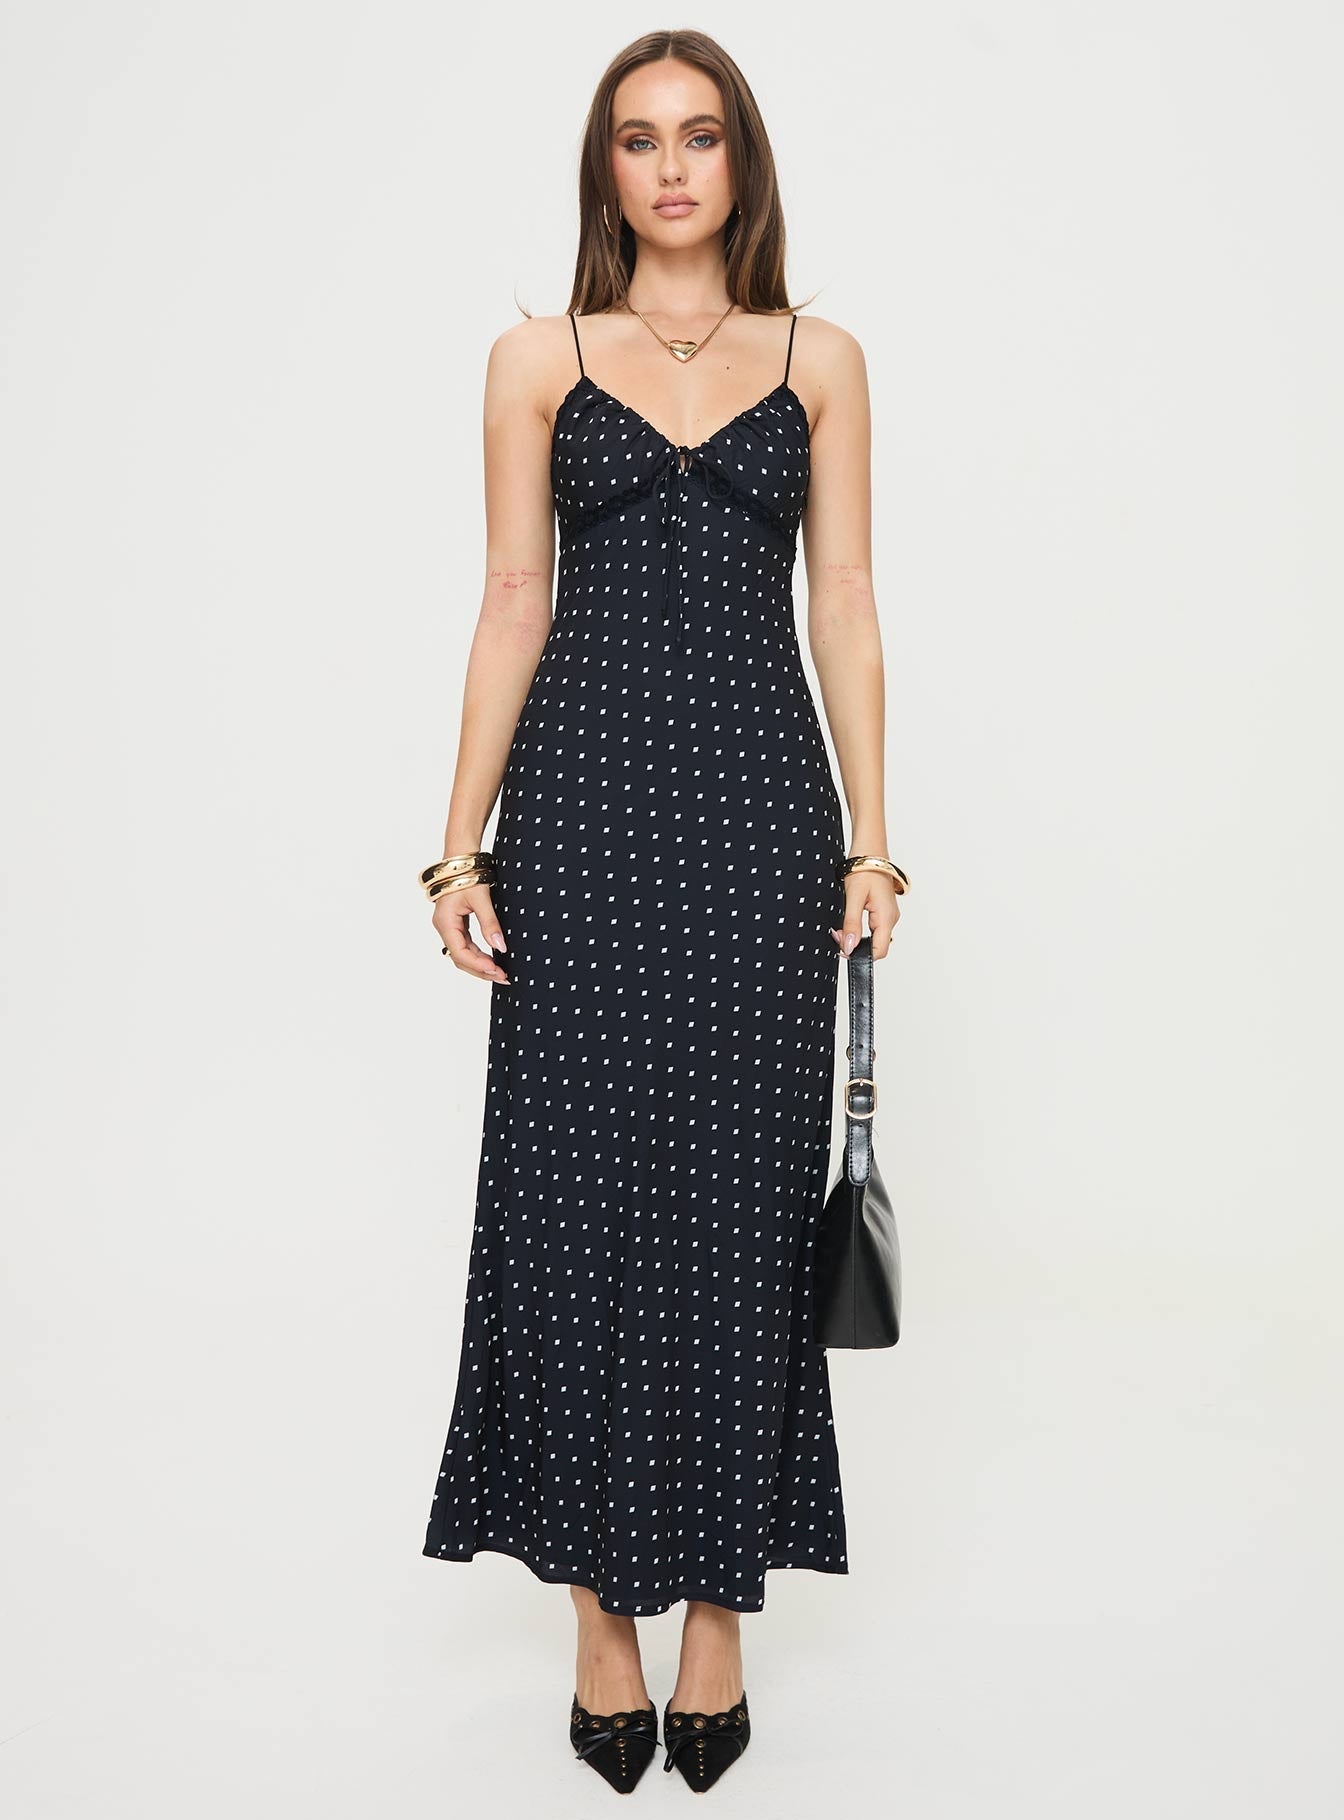 Shop Formal Dress - Emily Maxi Dress Black Polka Dot secondary image